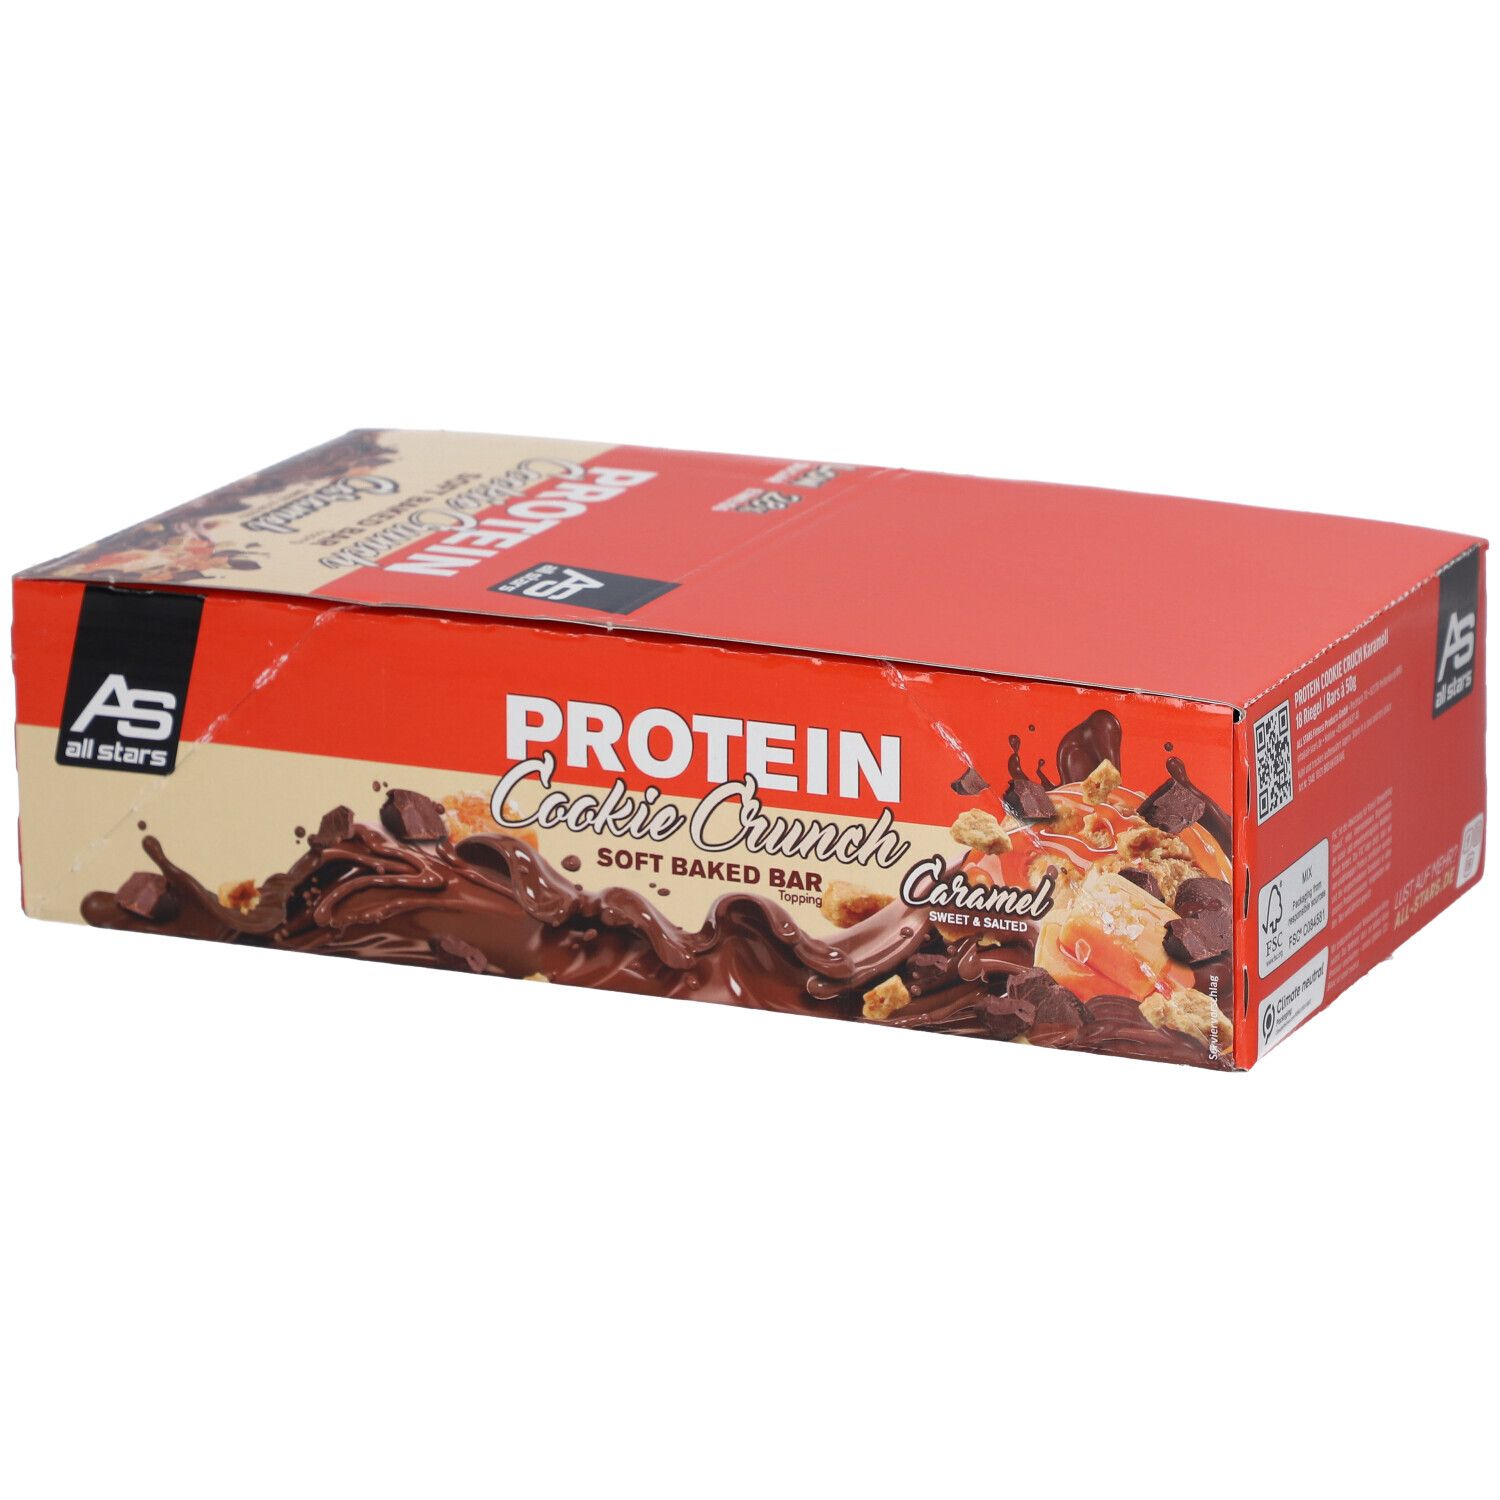 All Stars® Protein Cookie Crunch